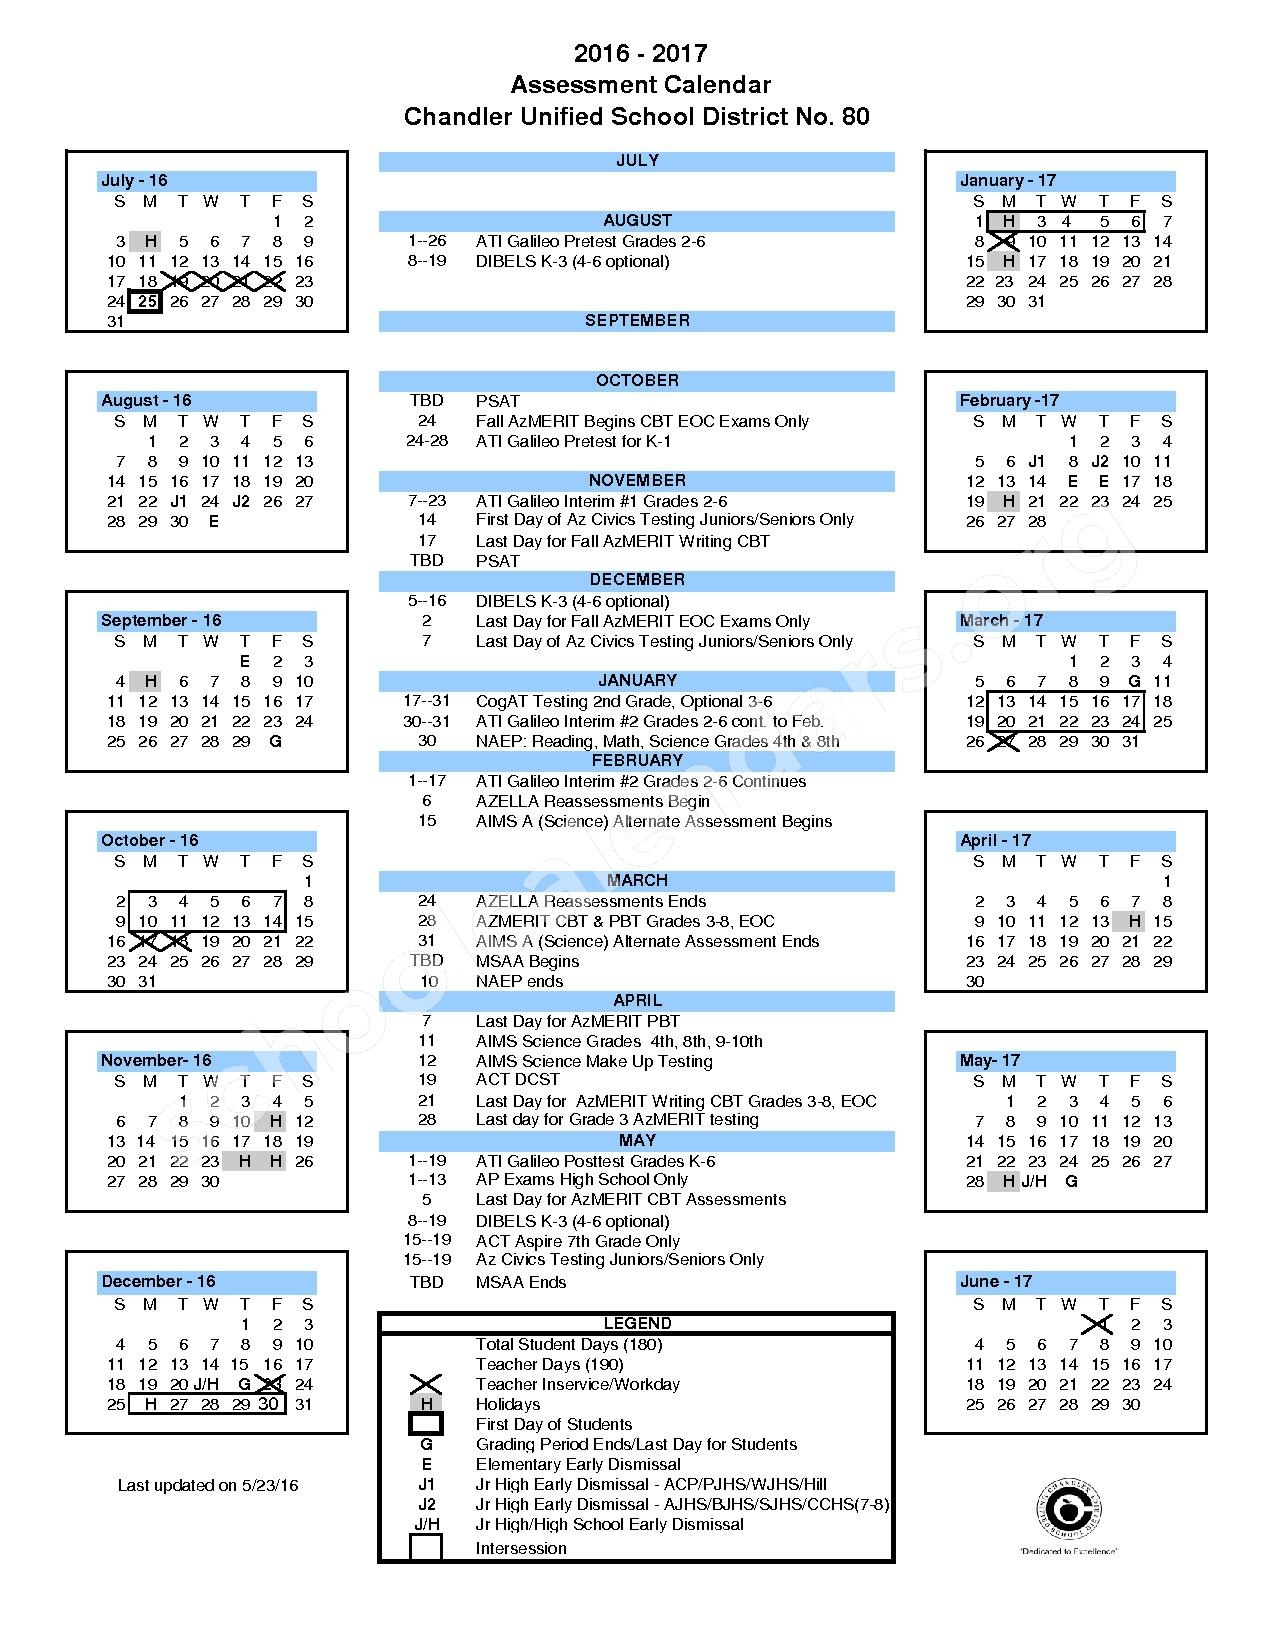 Chandler Unified School District Calendar Qualads